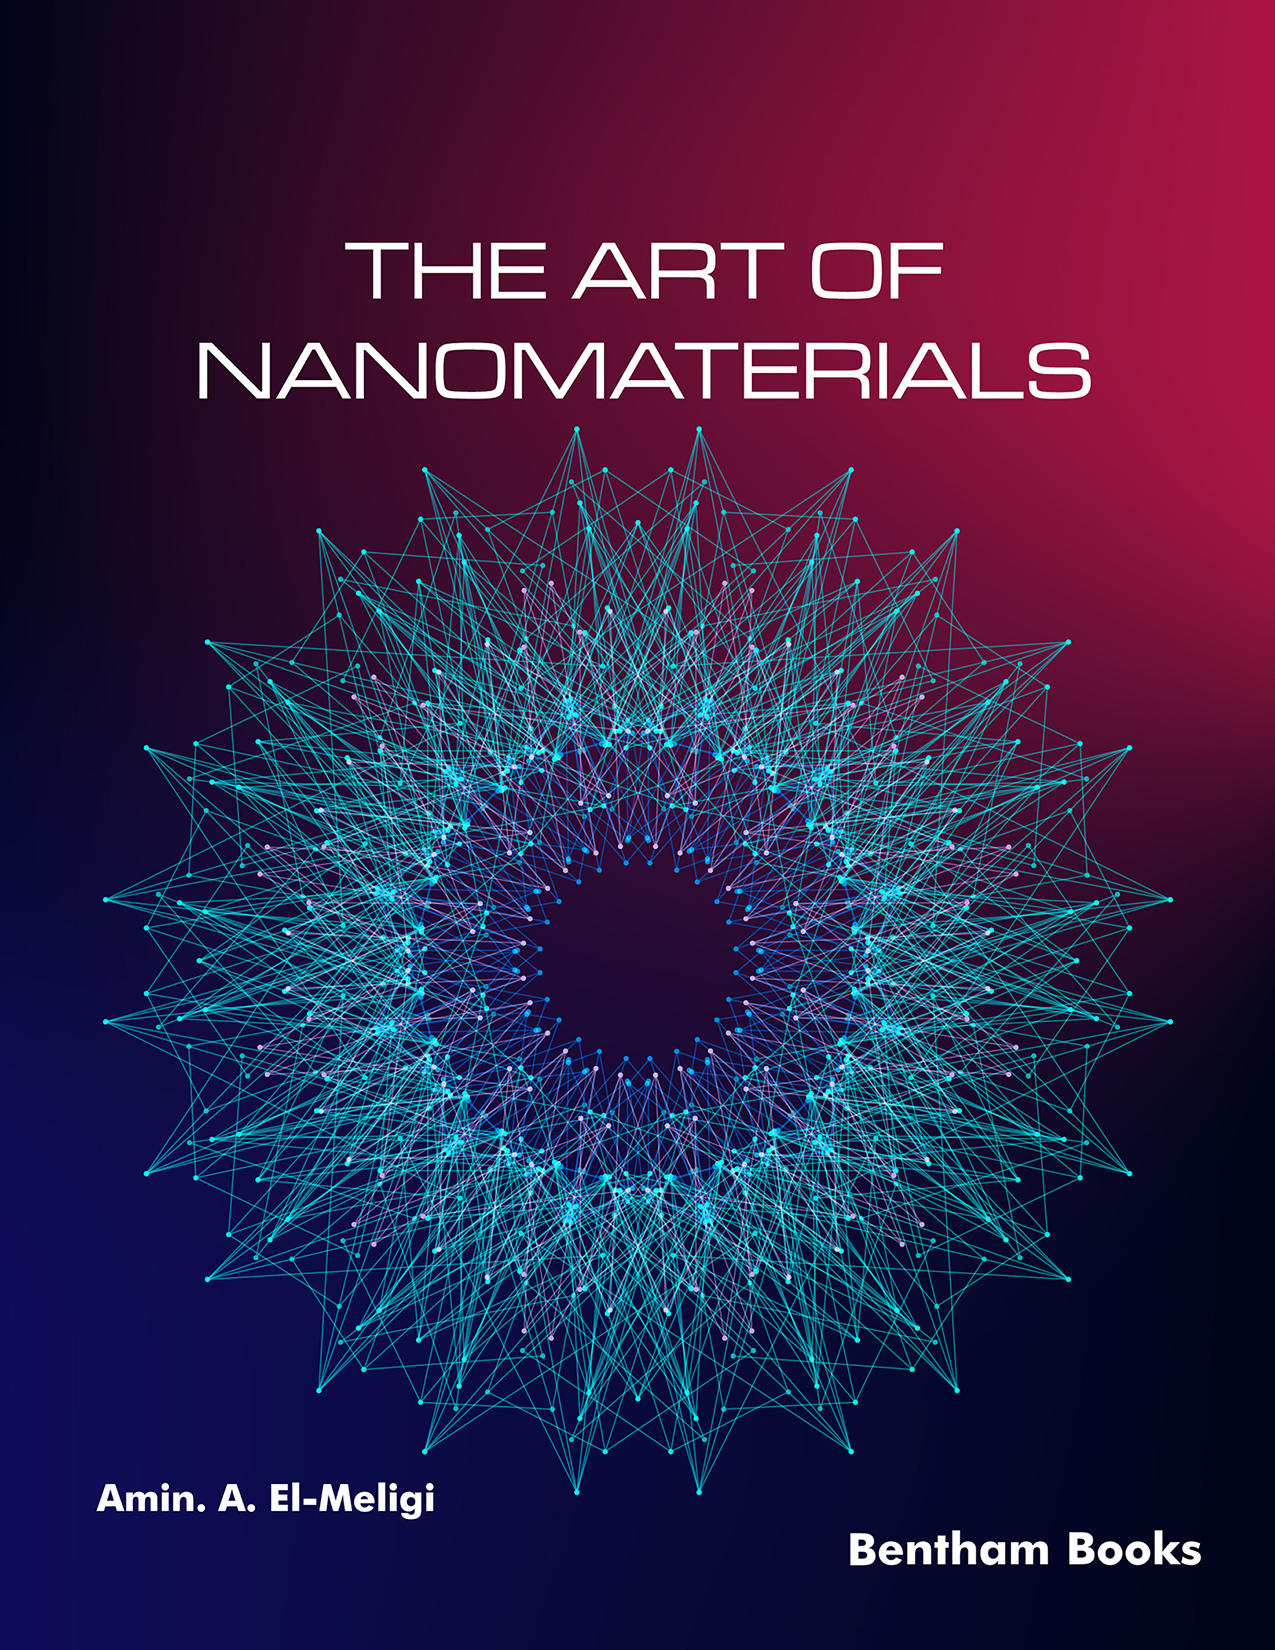 The Art of Nanomaterials